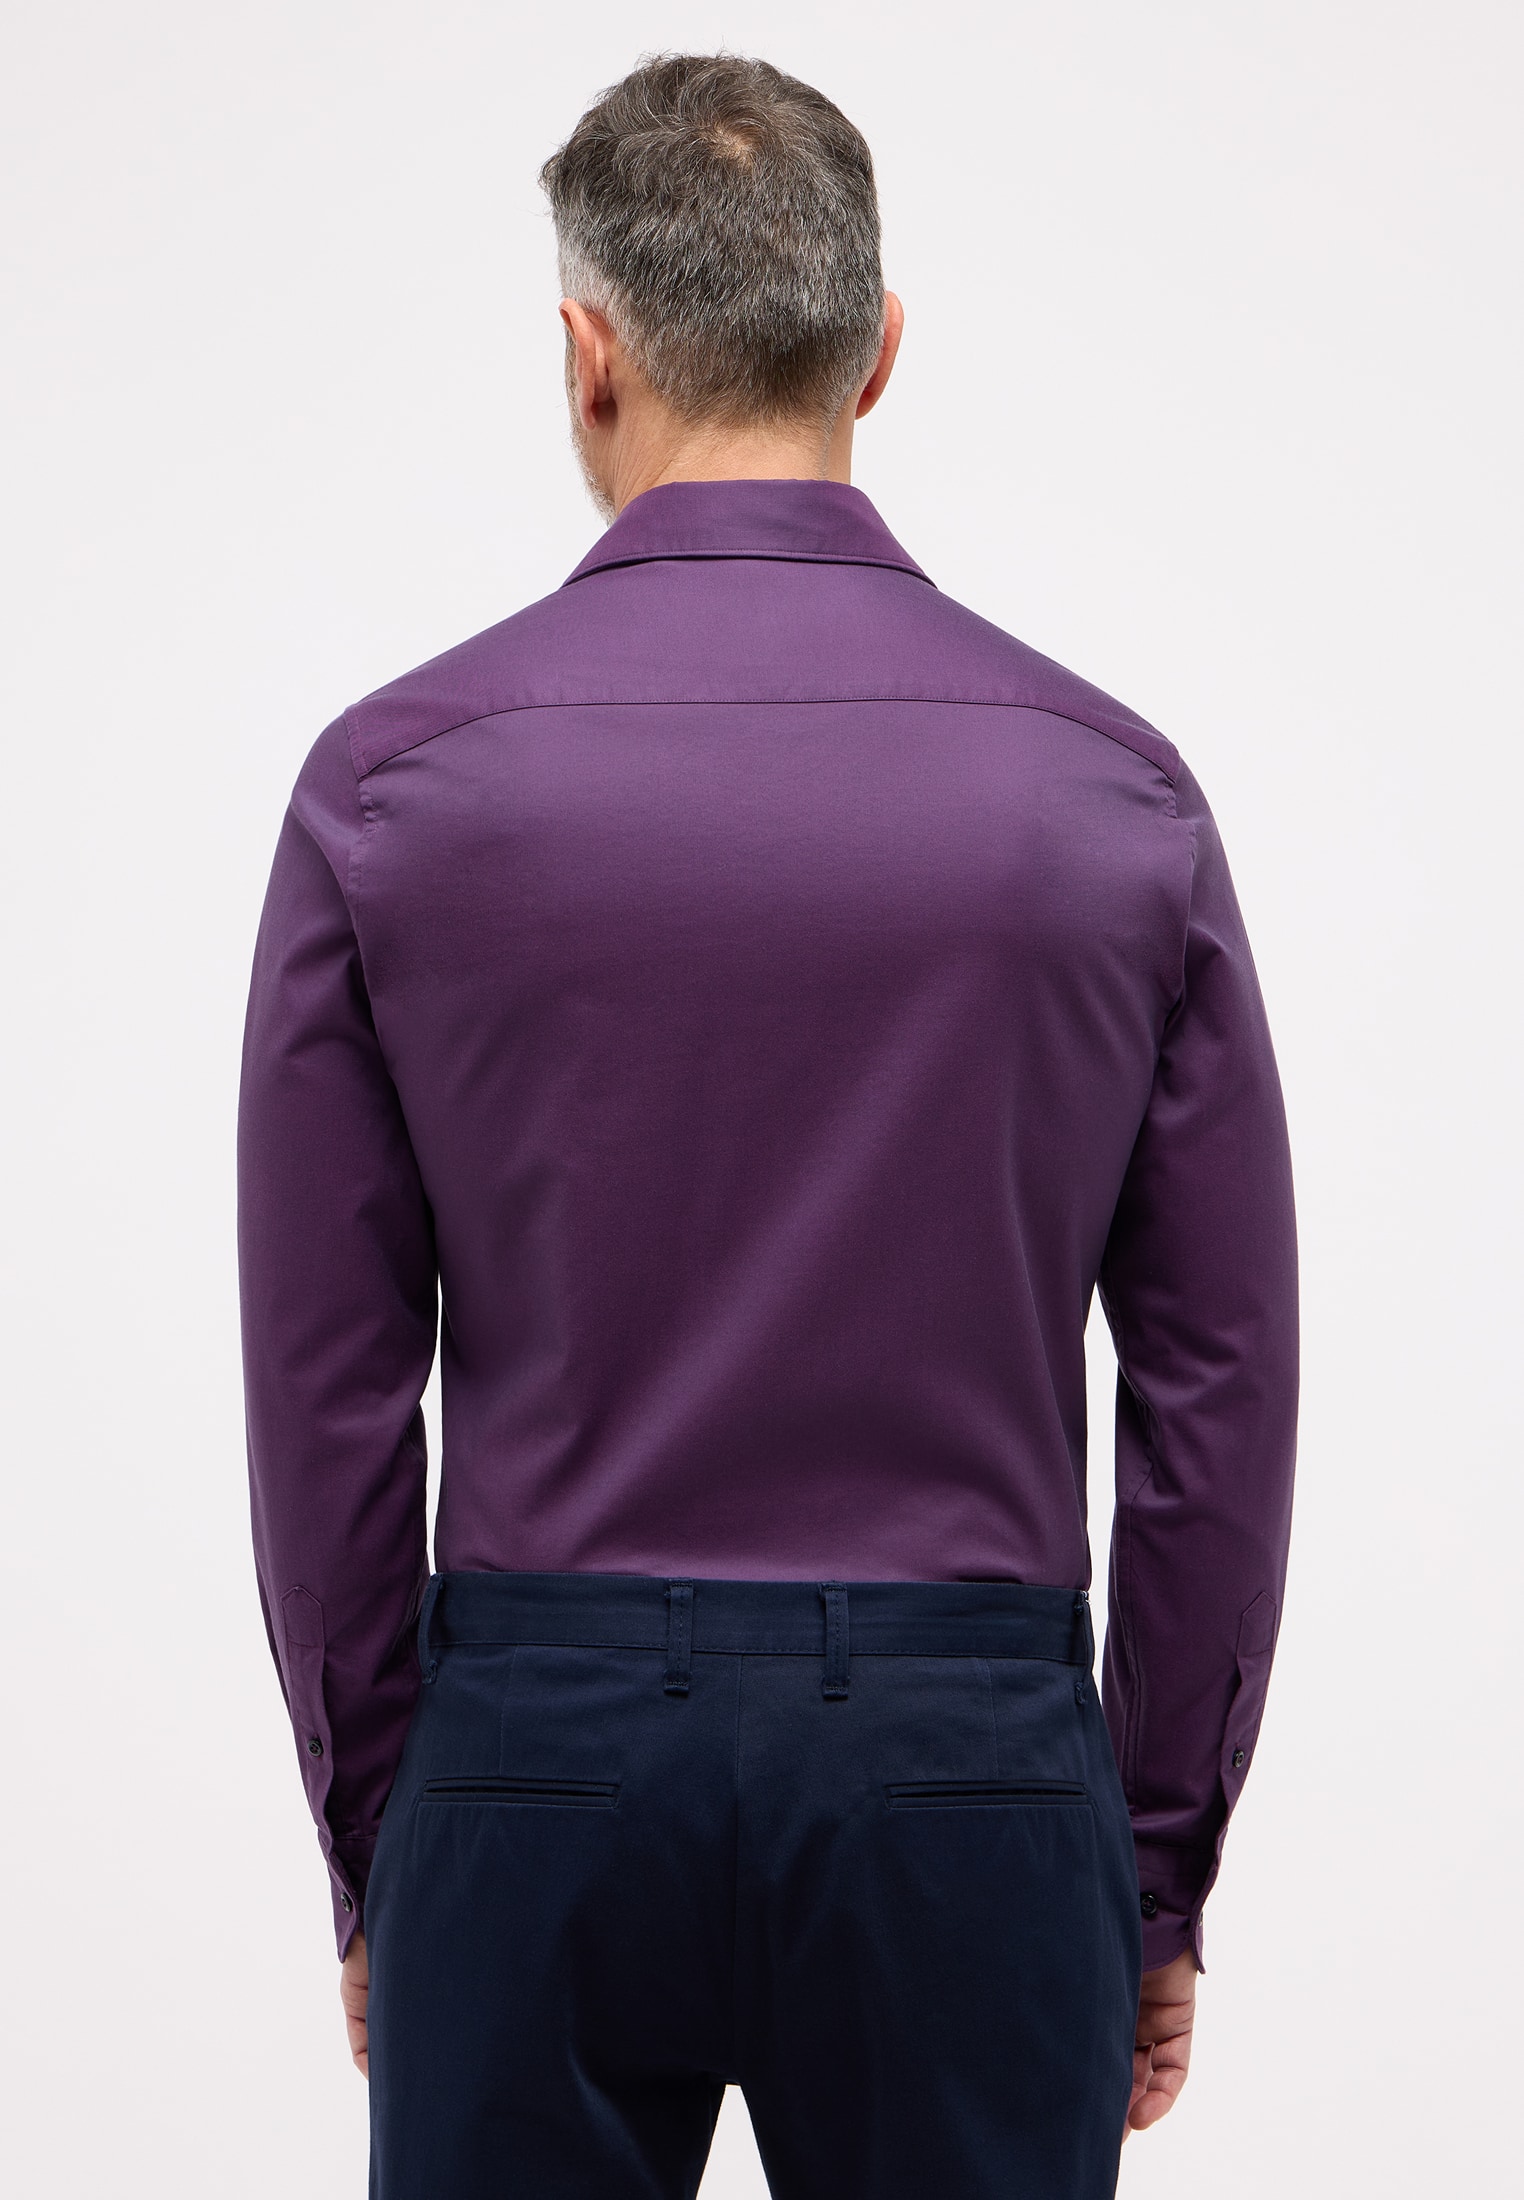 SLIM FIT Soft Luxury Shirt burgunder | unifarben | in | 38 1SH03482-05-81-38-1/1 burgunder | Langarm